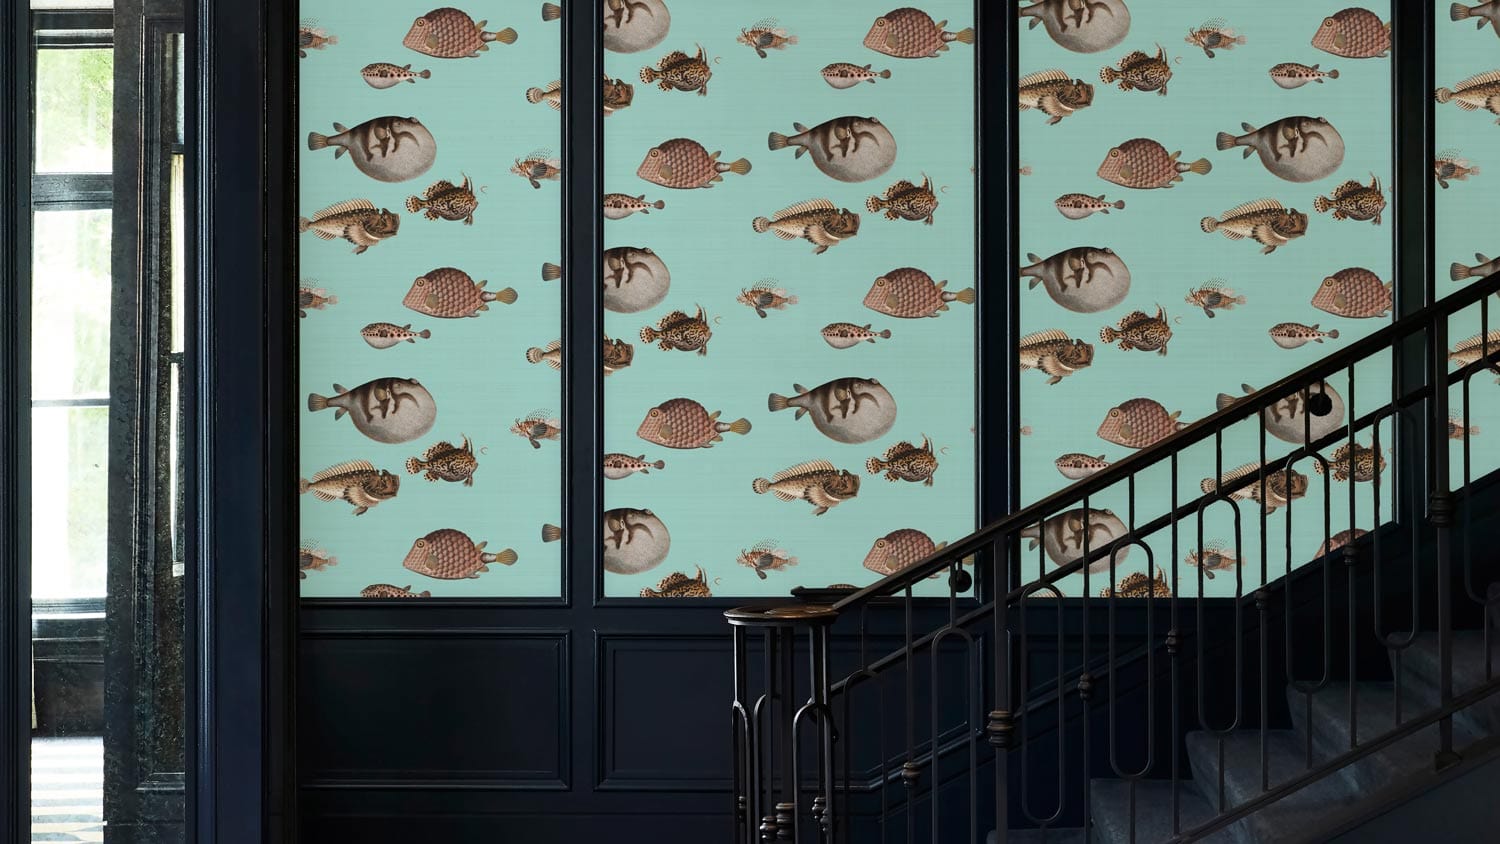 round fat fish and strange pattern fish wallpaper mural design